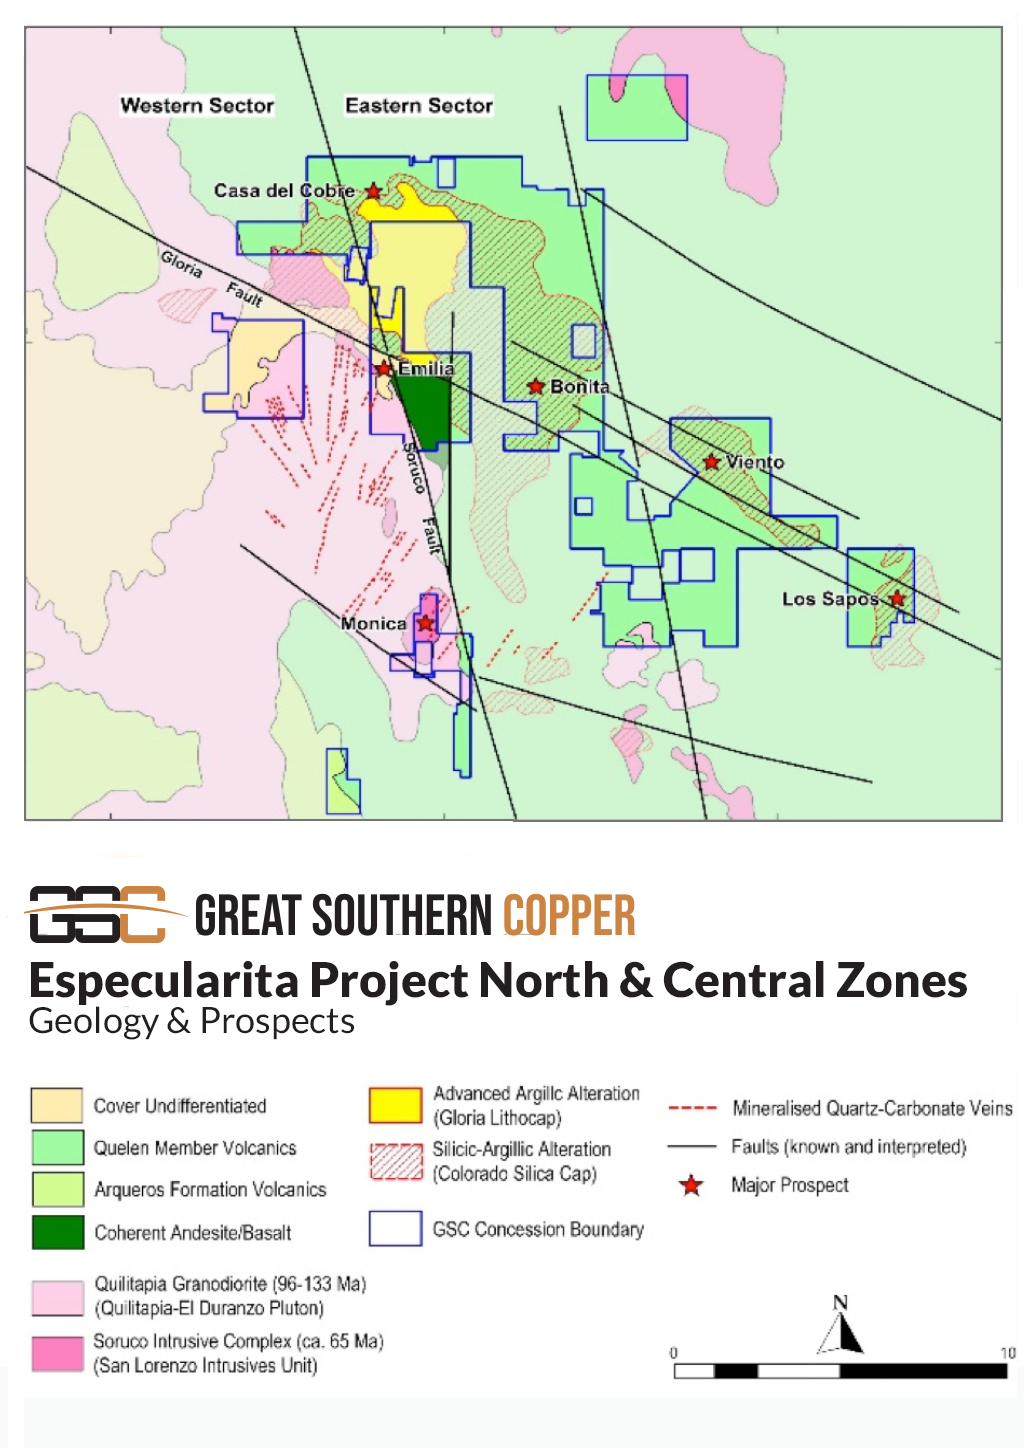 Especularita Project North Alteration Zones